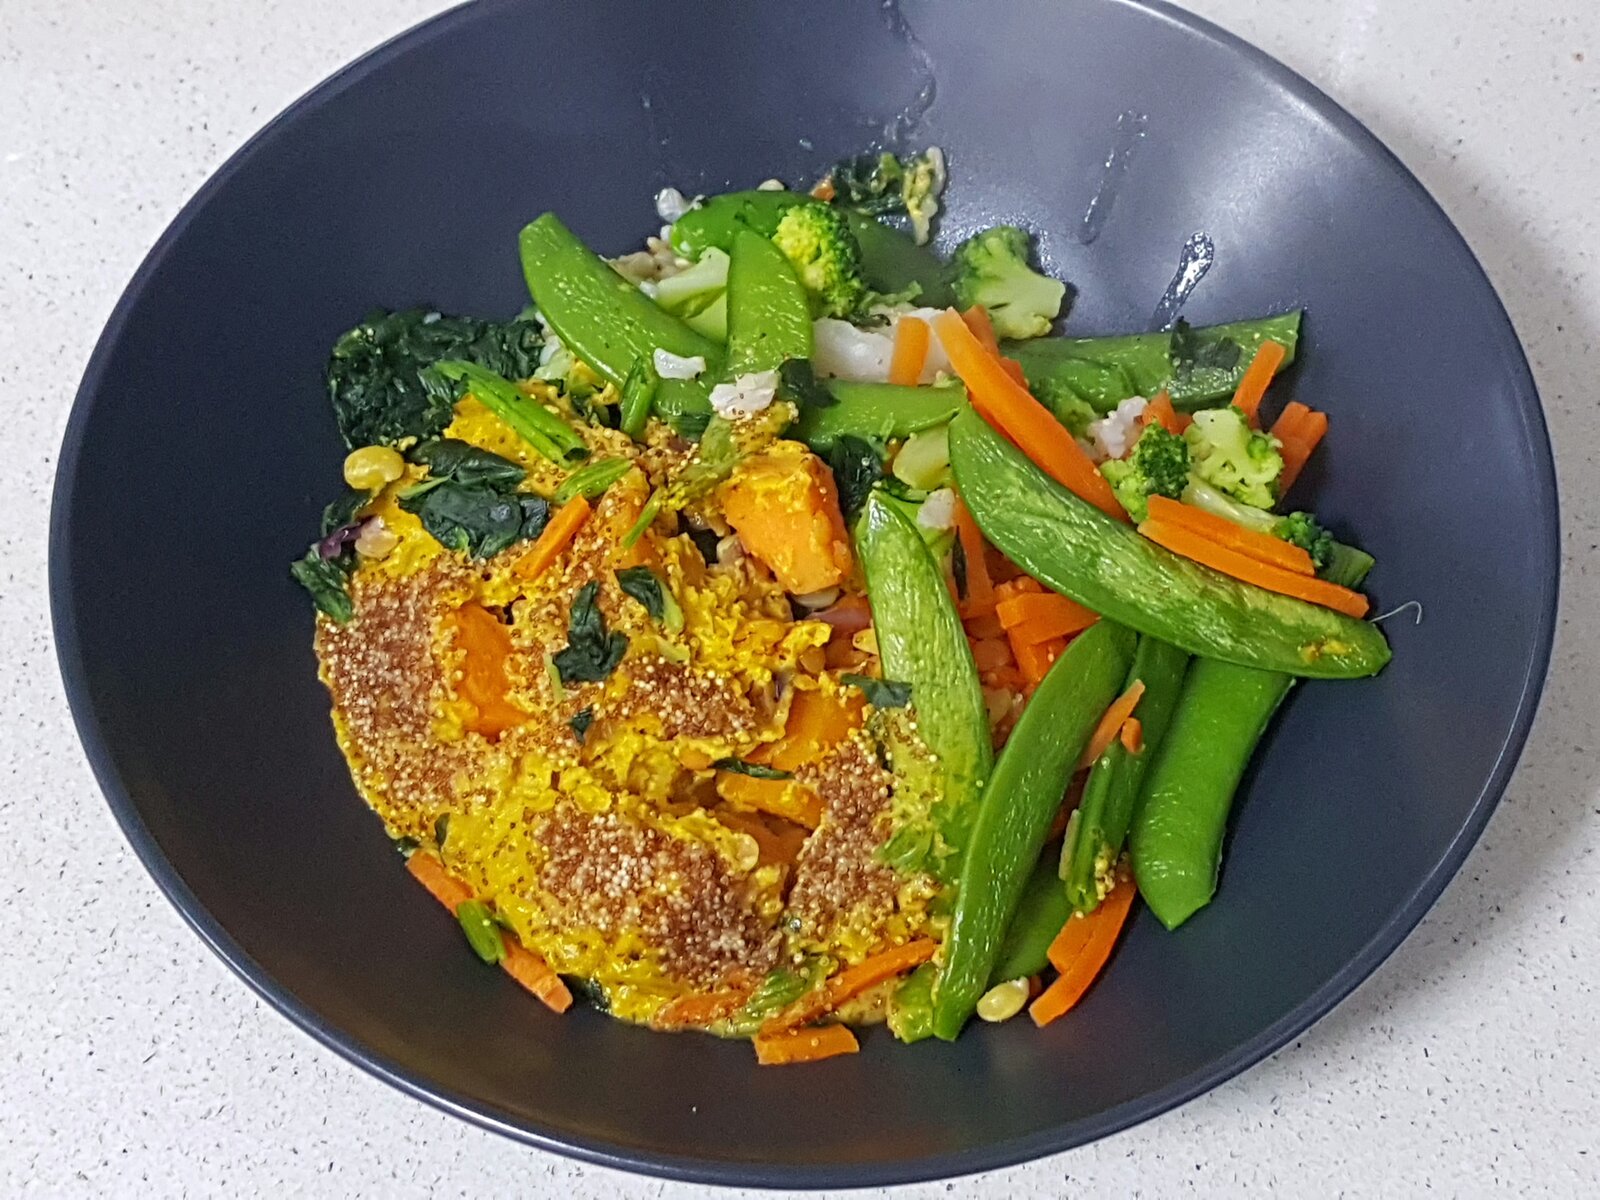 Vegan Meal in a Bowl (Sri Lankan Curry)